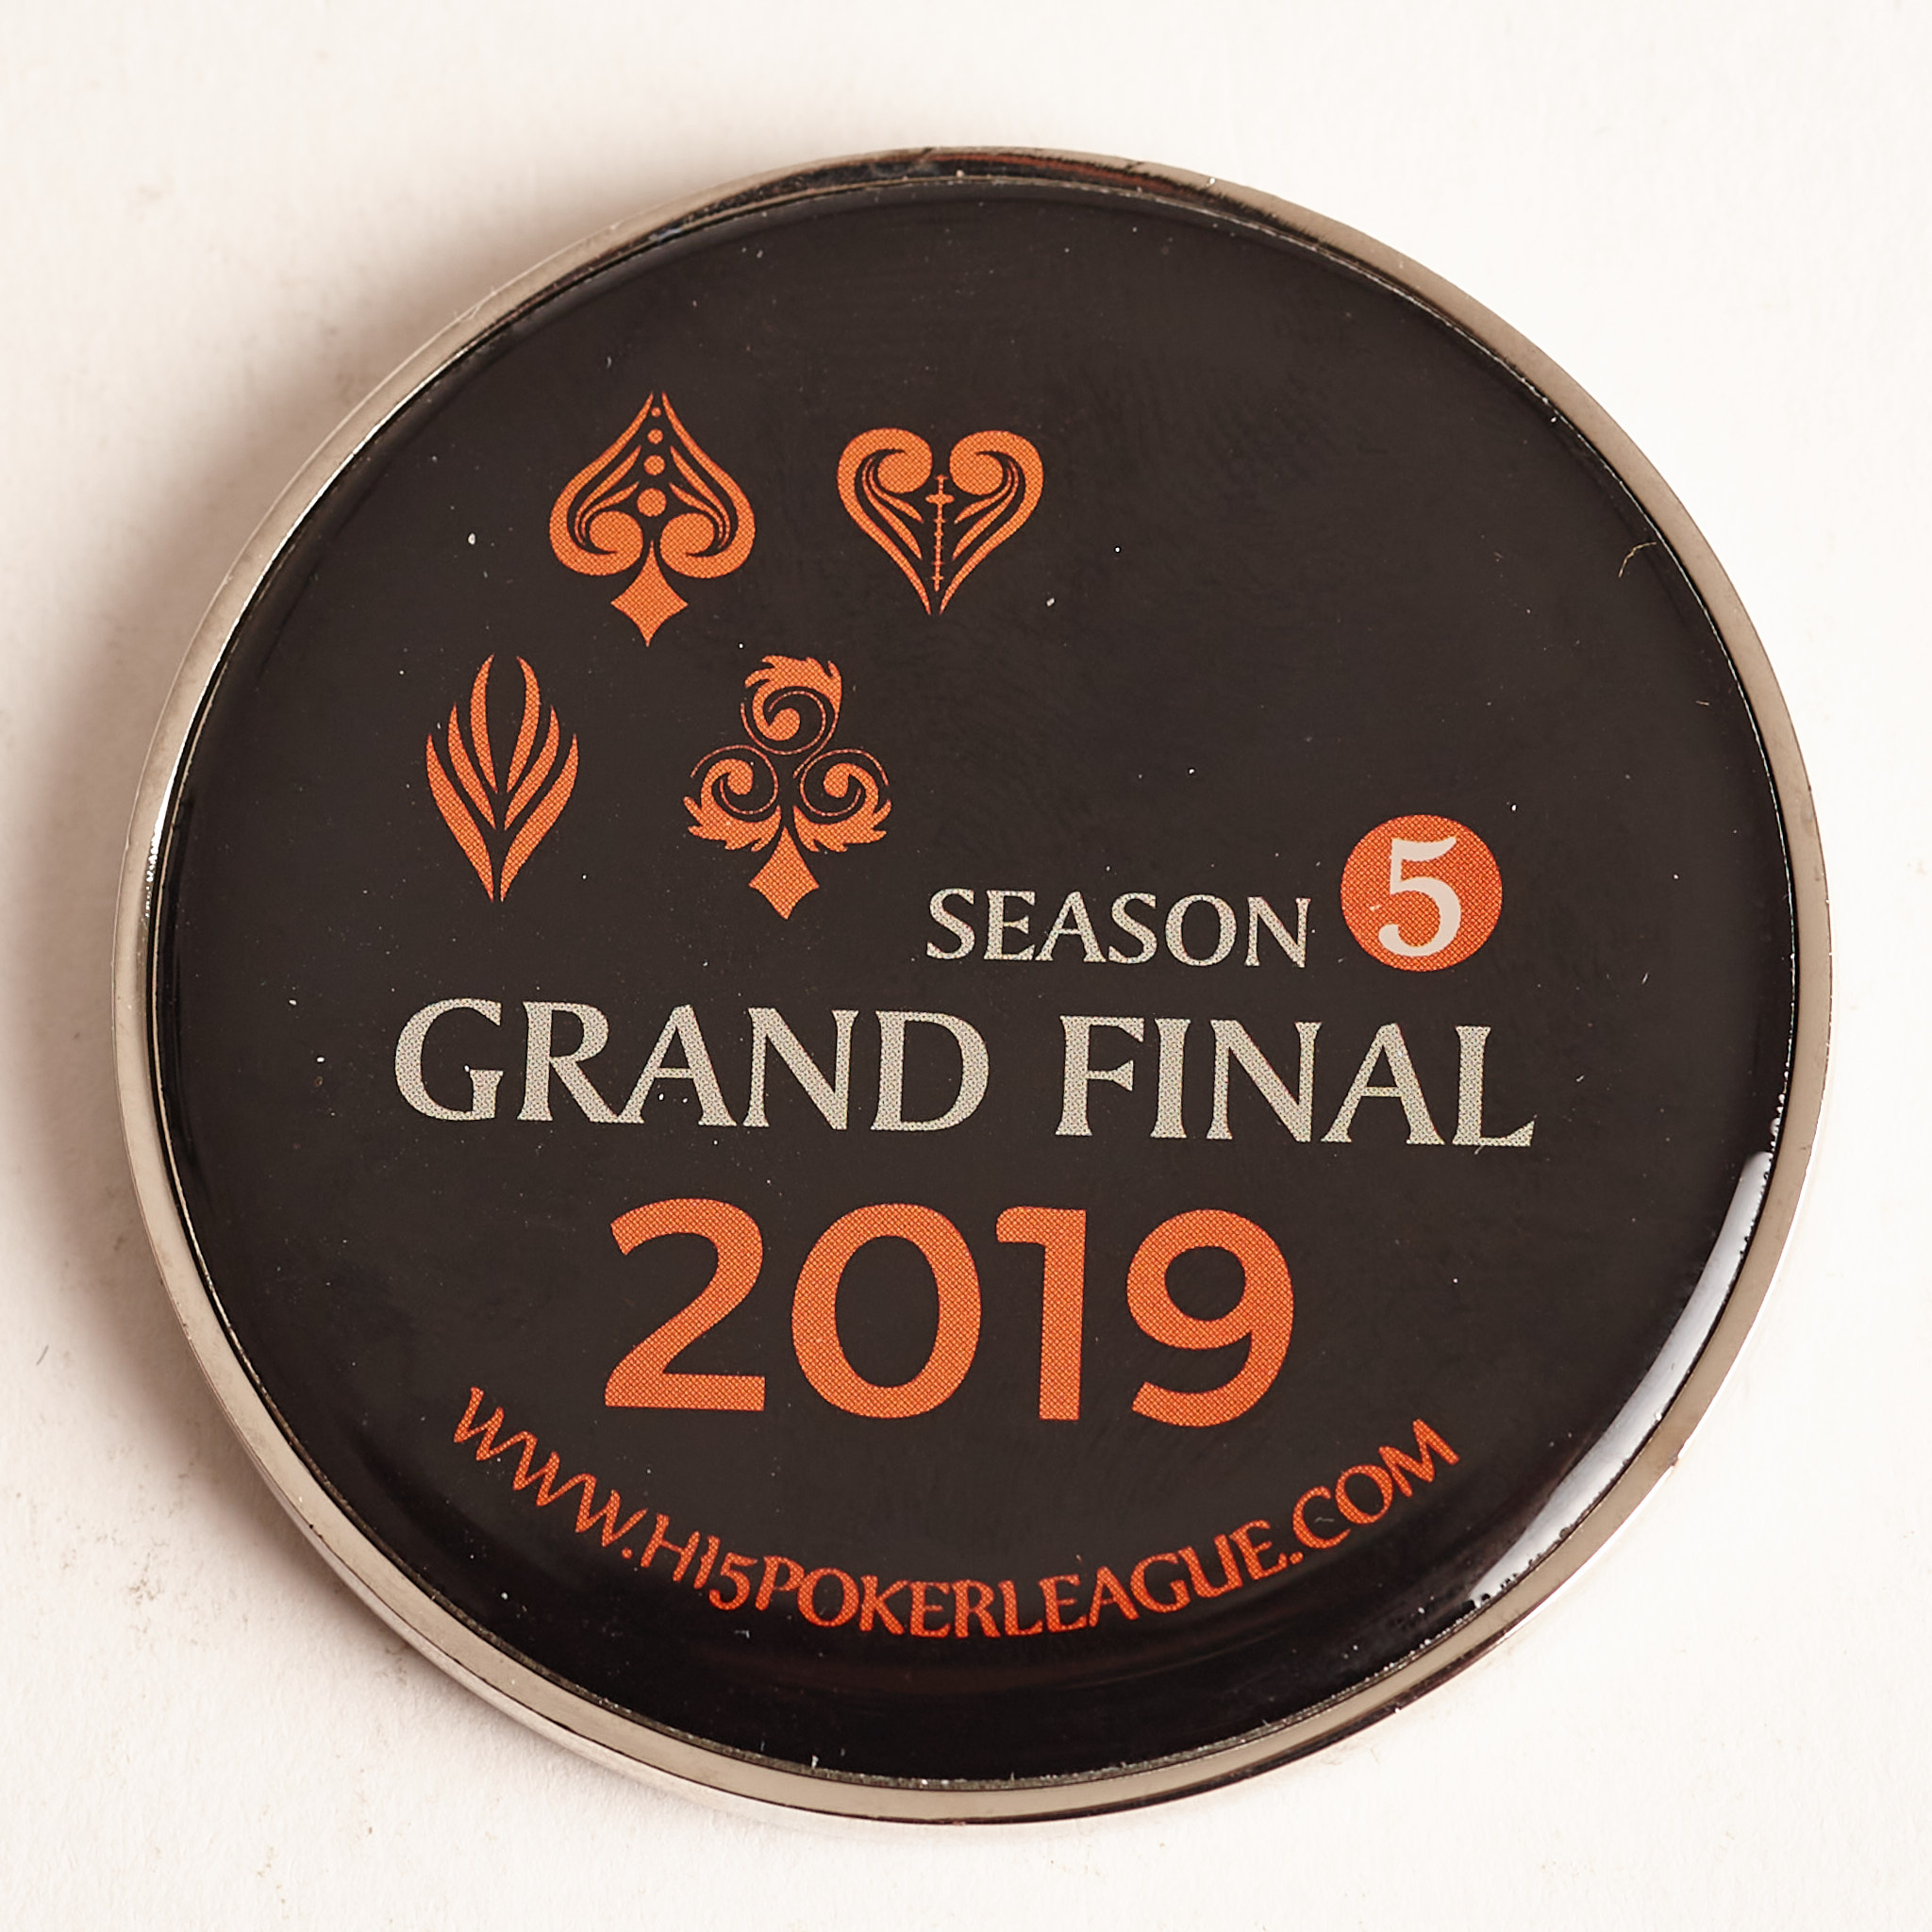 HI 5 POKER LEAGUE, SEASON 5, GRAND FINAL 2019, Poker Card Guard